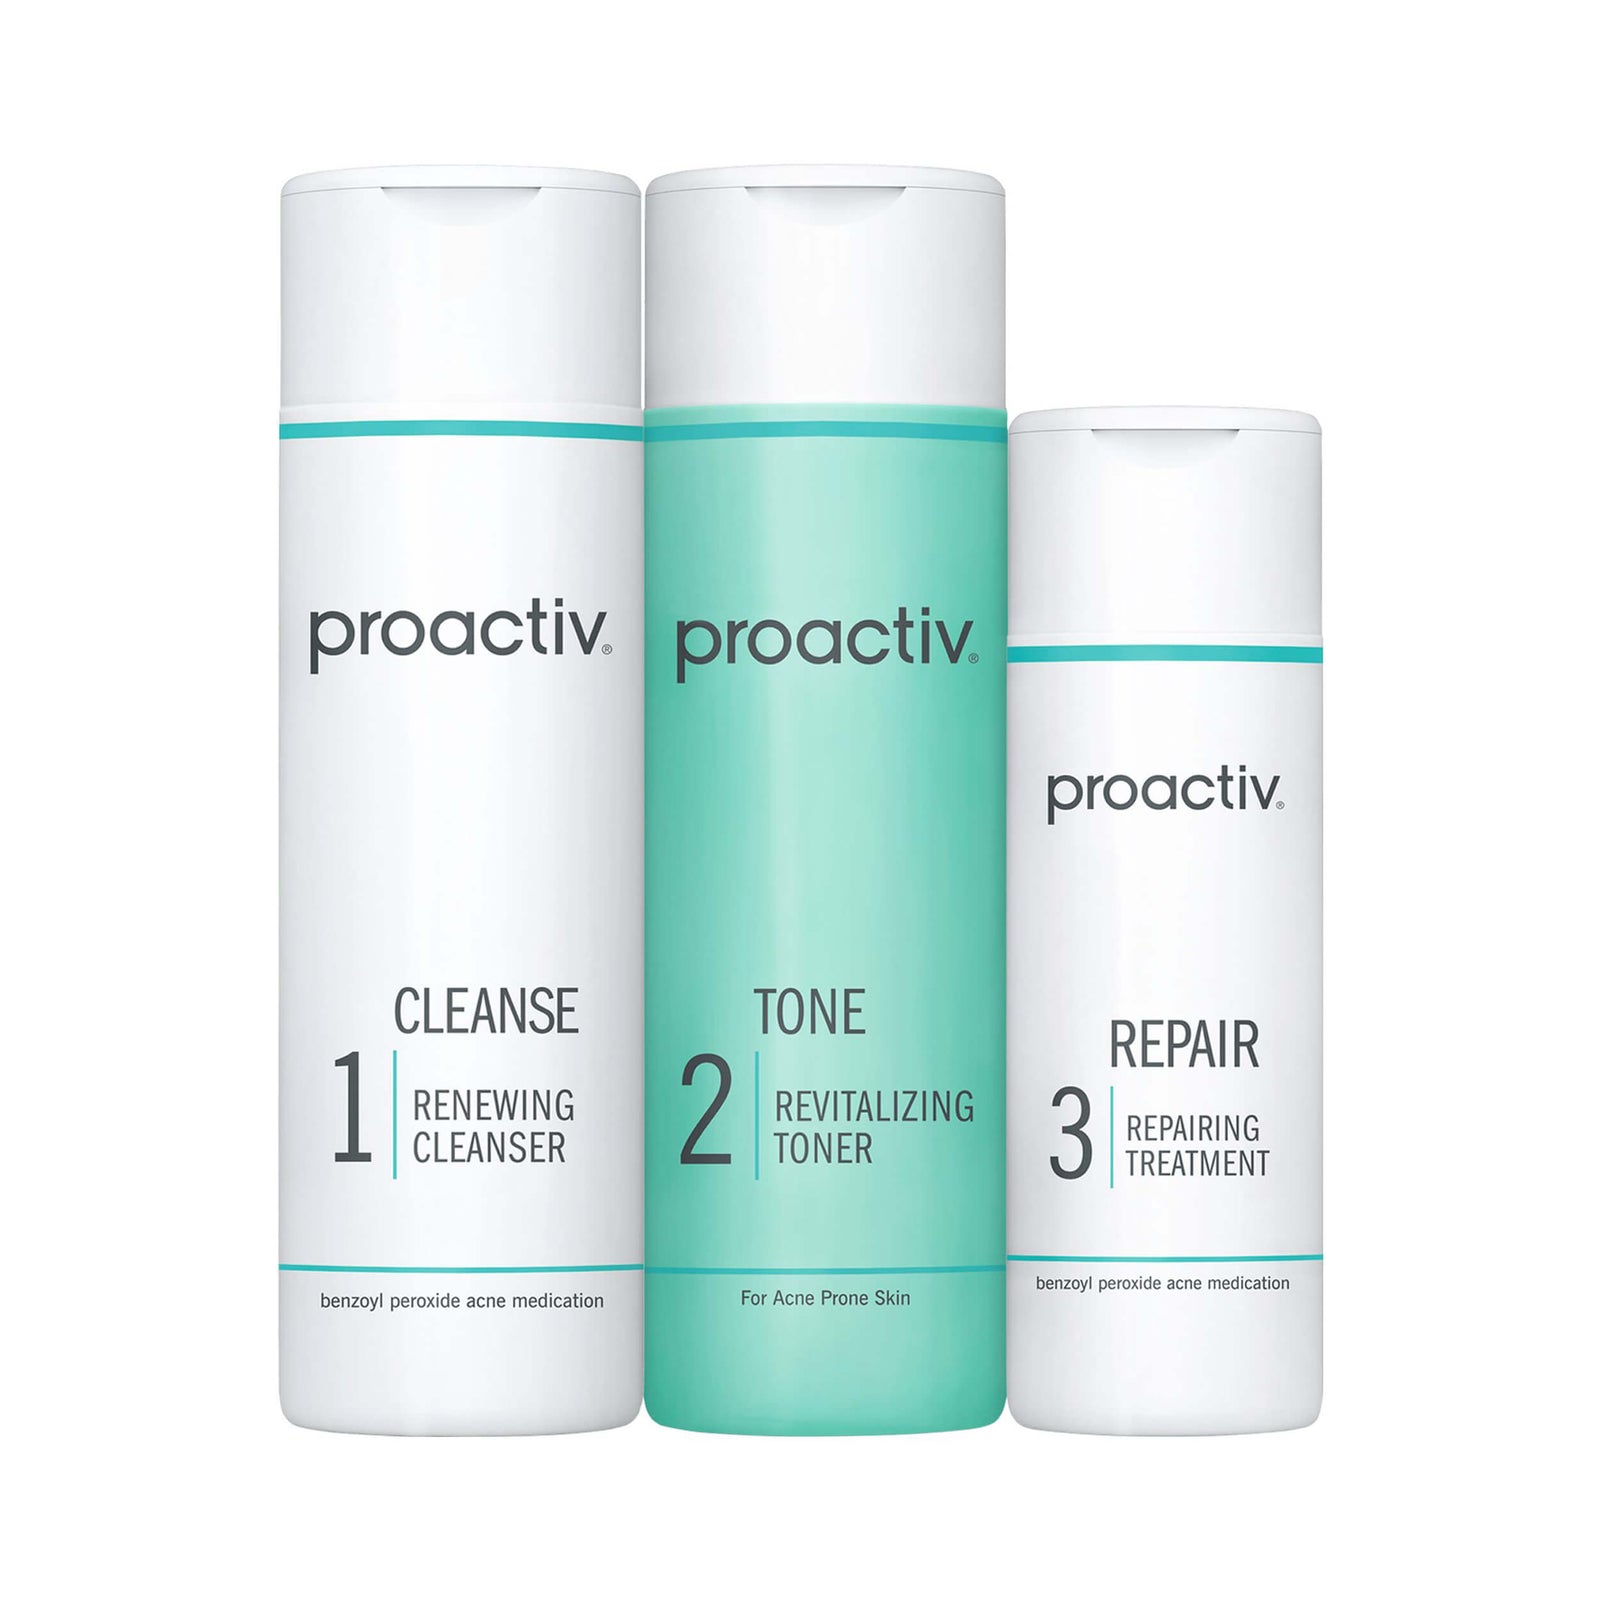 Buy Proactiv Skin Care Products Online - MYQT.com.au